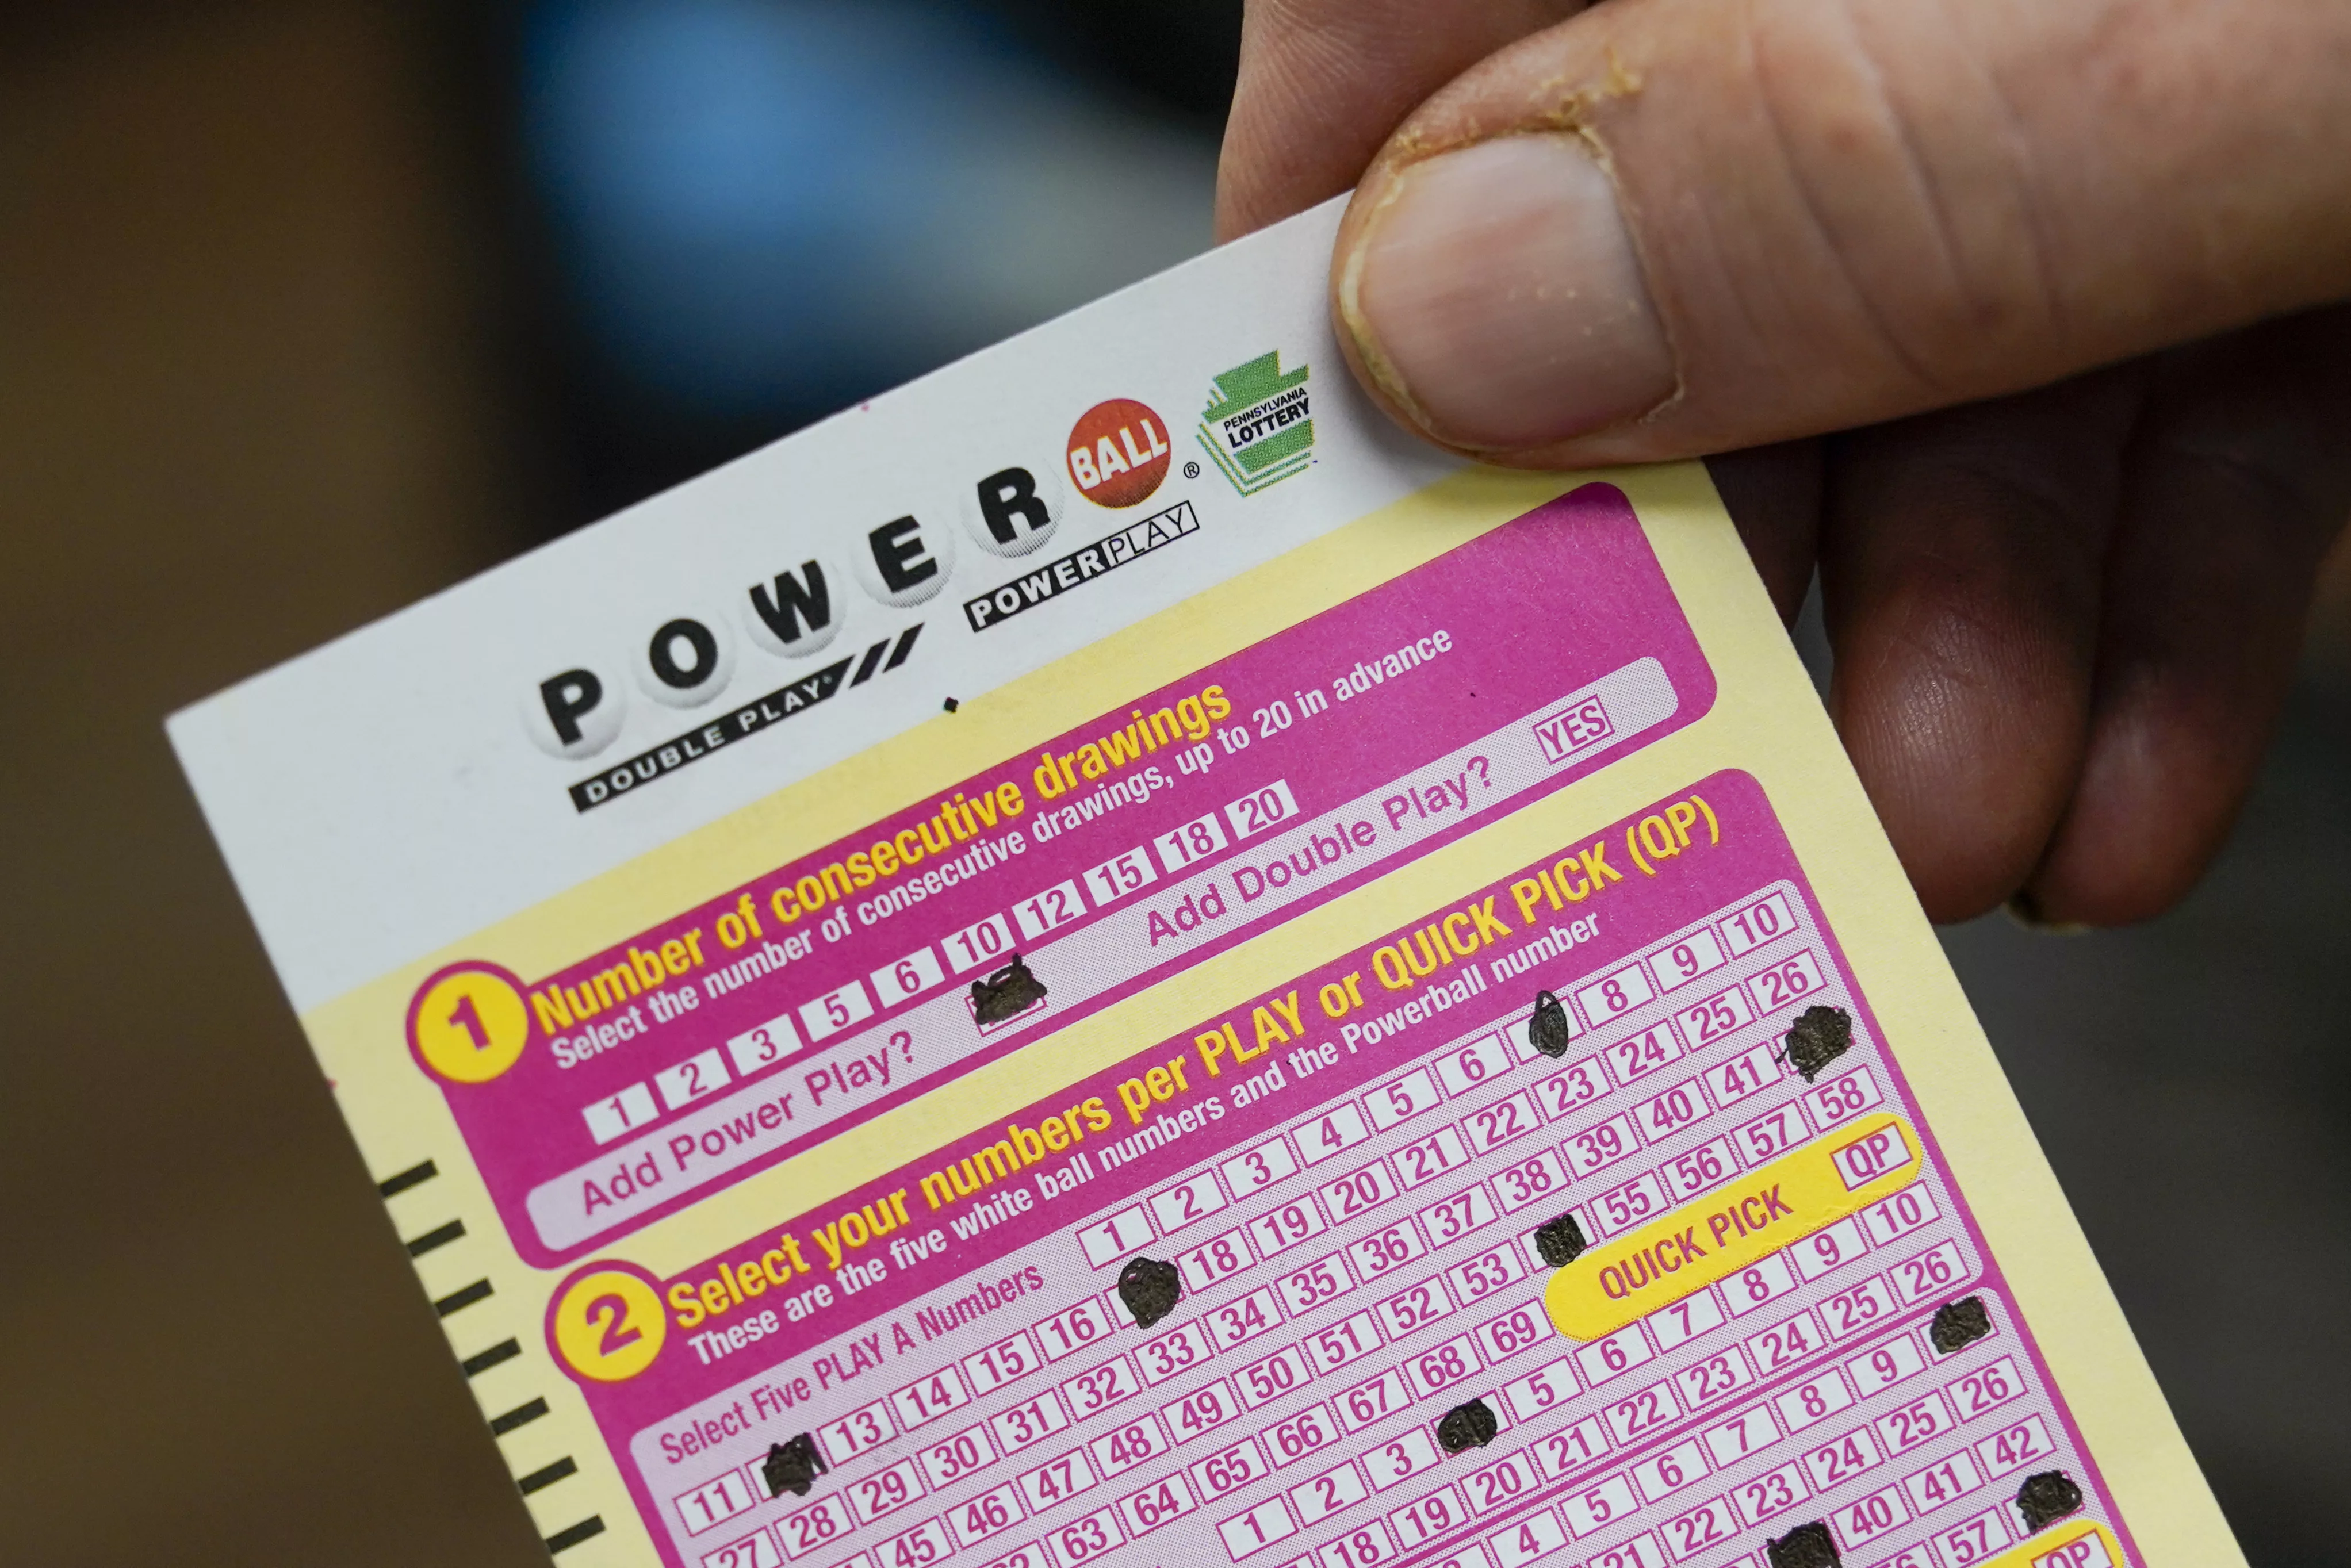 Winning Powerball jackpot ticket worth 1.3 billion sold in Portland